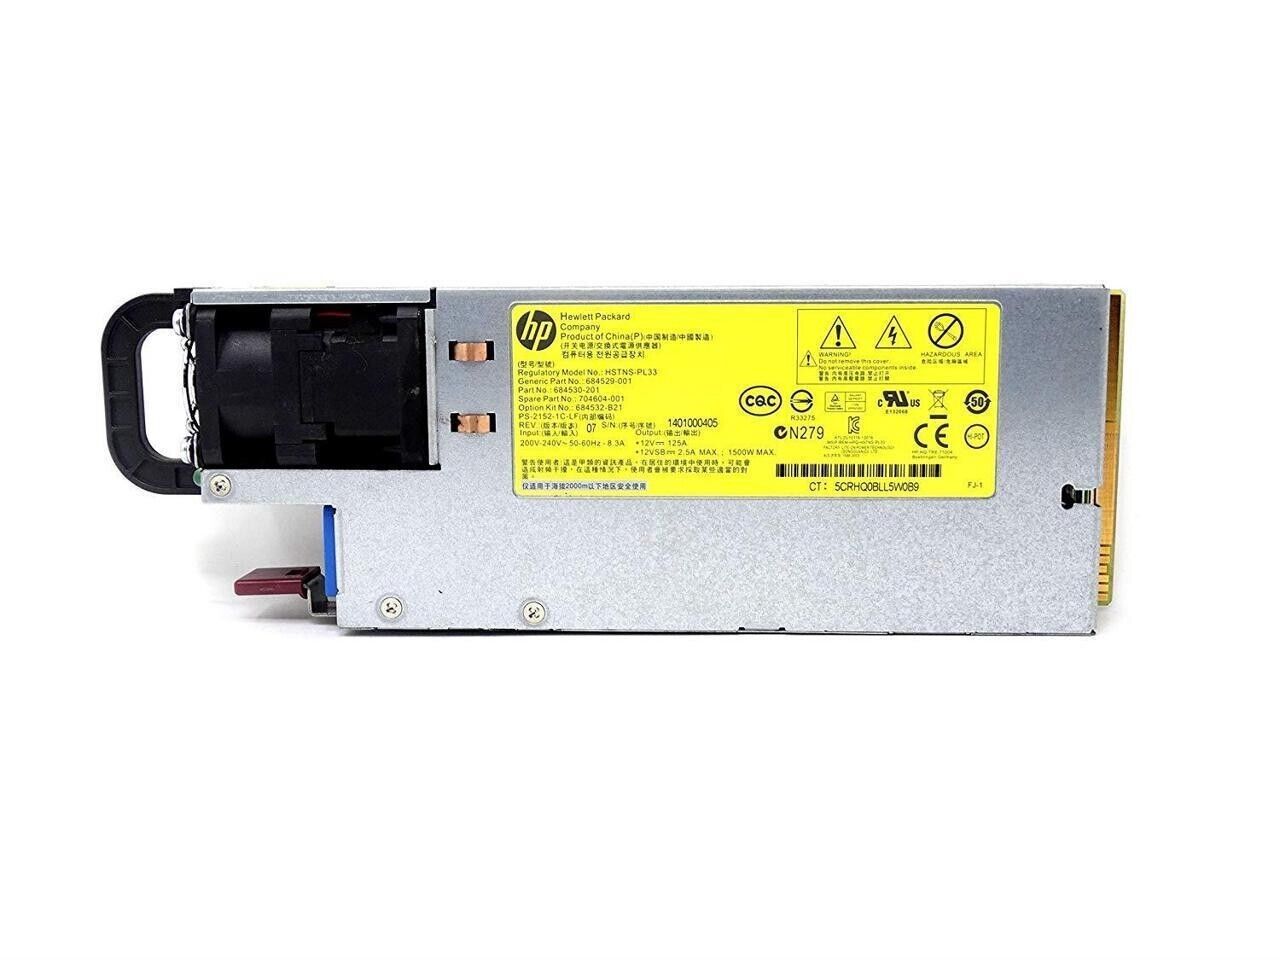 HP 684532-B21 1500W Hot Plug Power Supply 684529-001 HSTNS-PL33